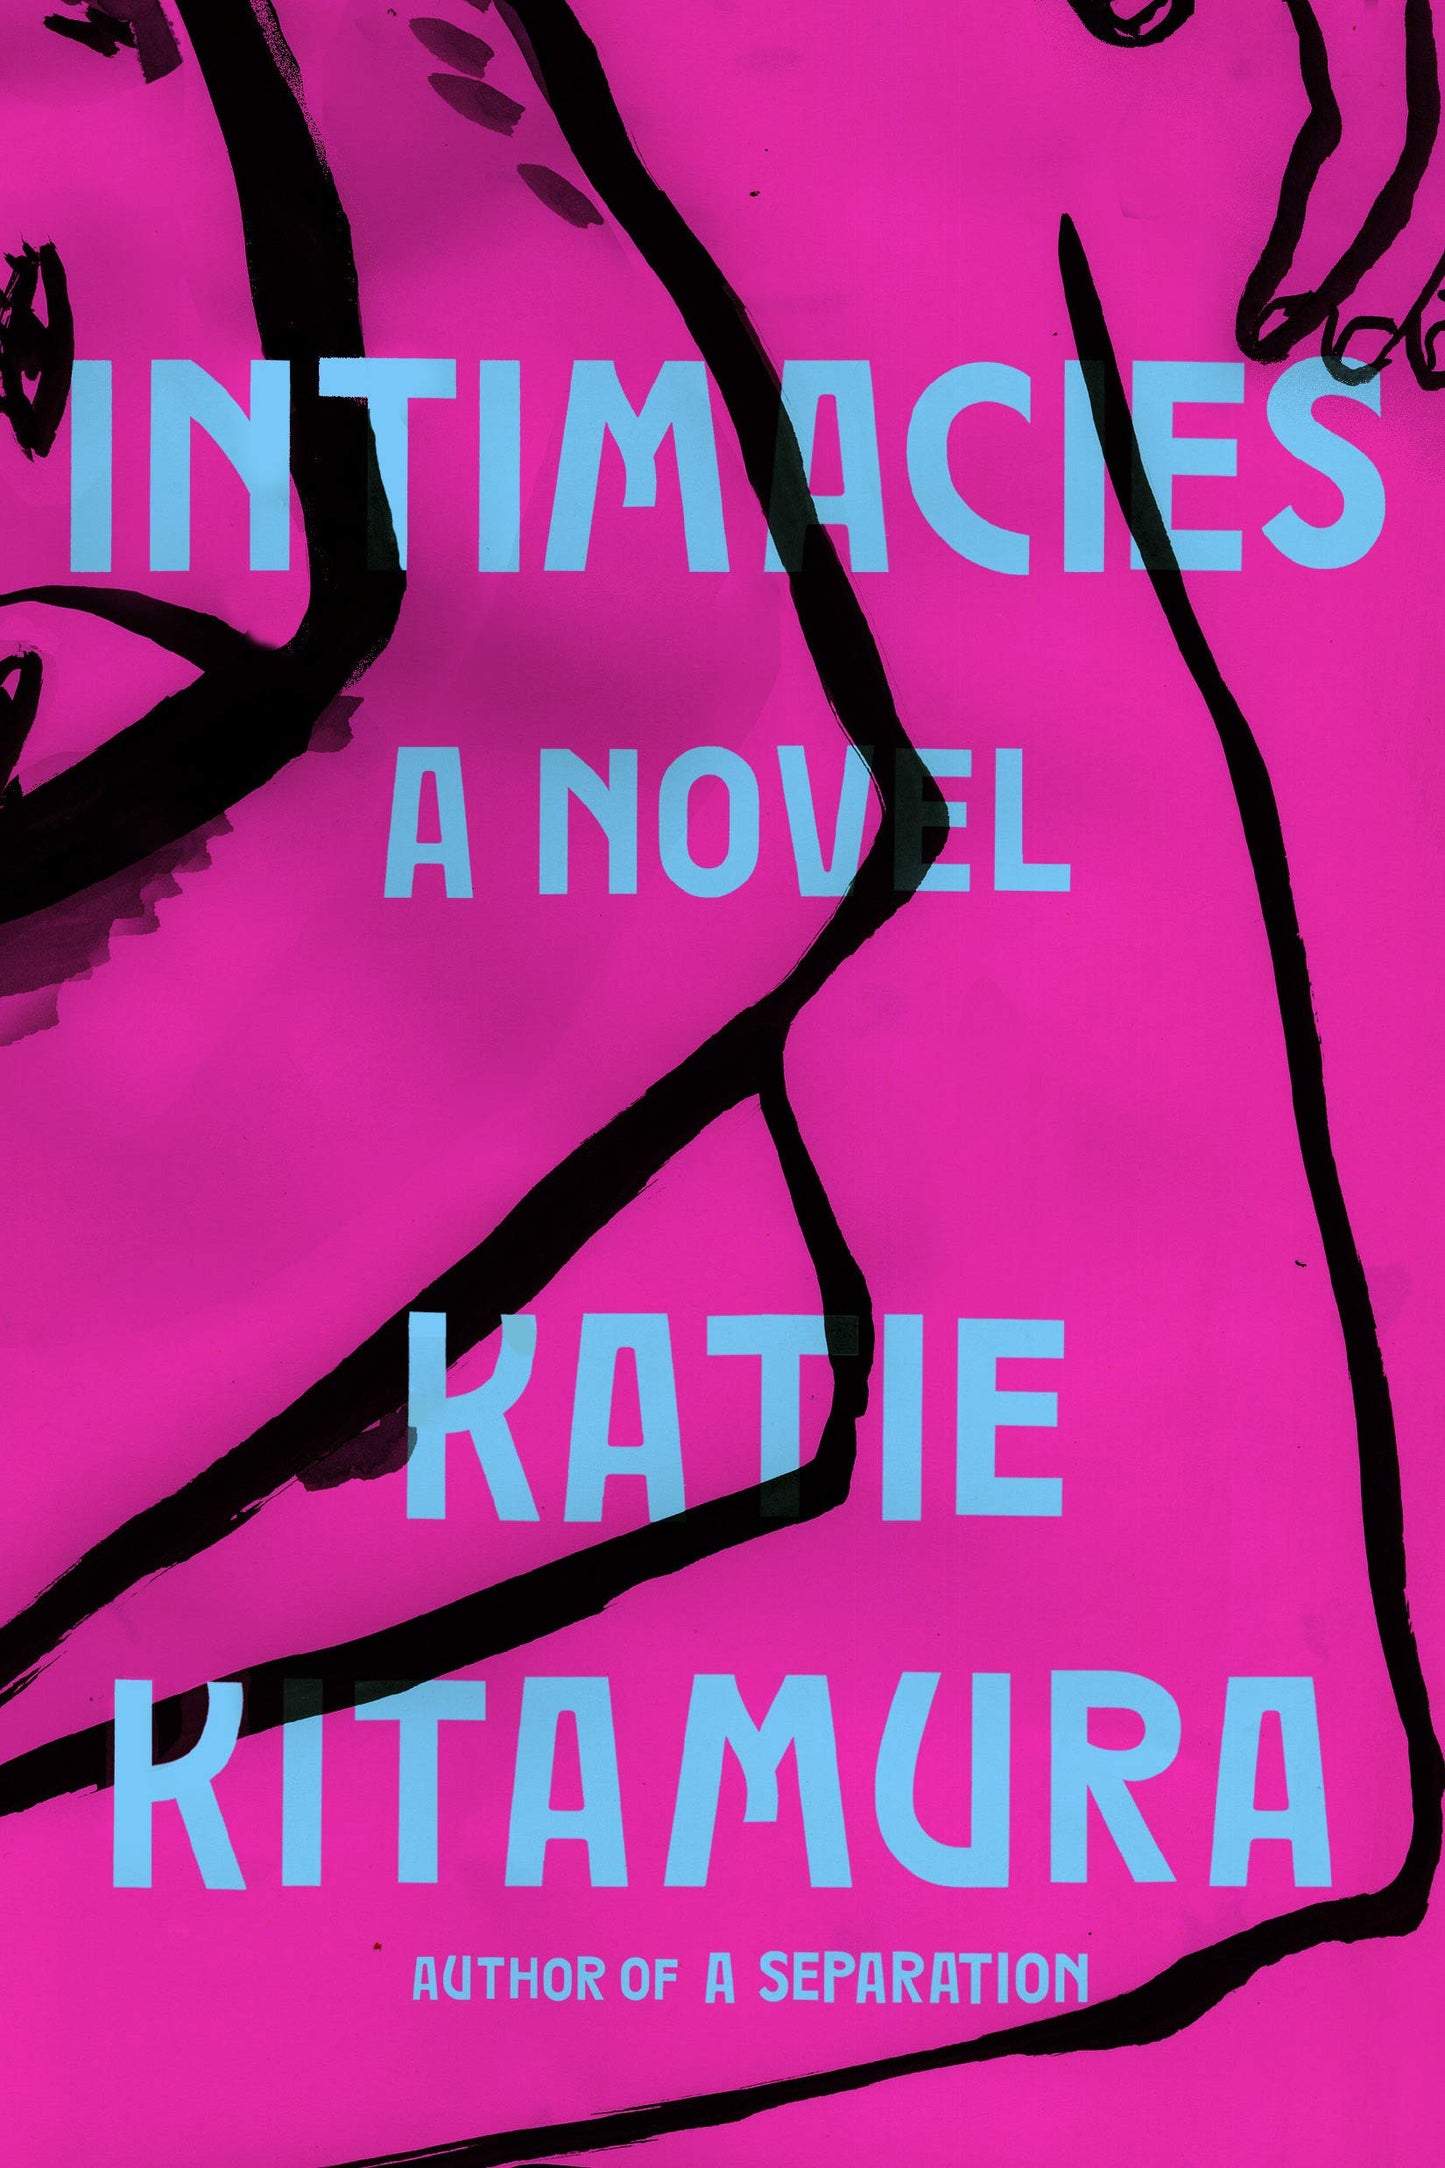 Intimacies // A Novel